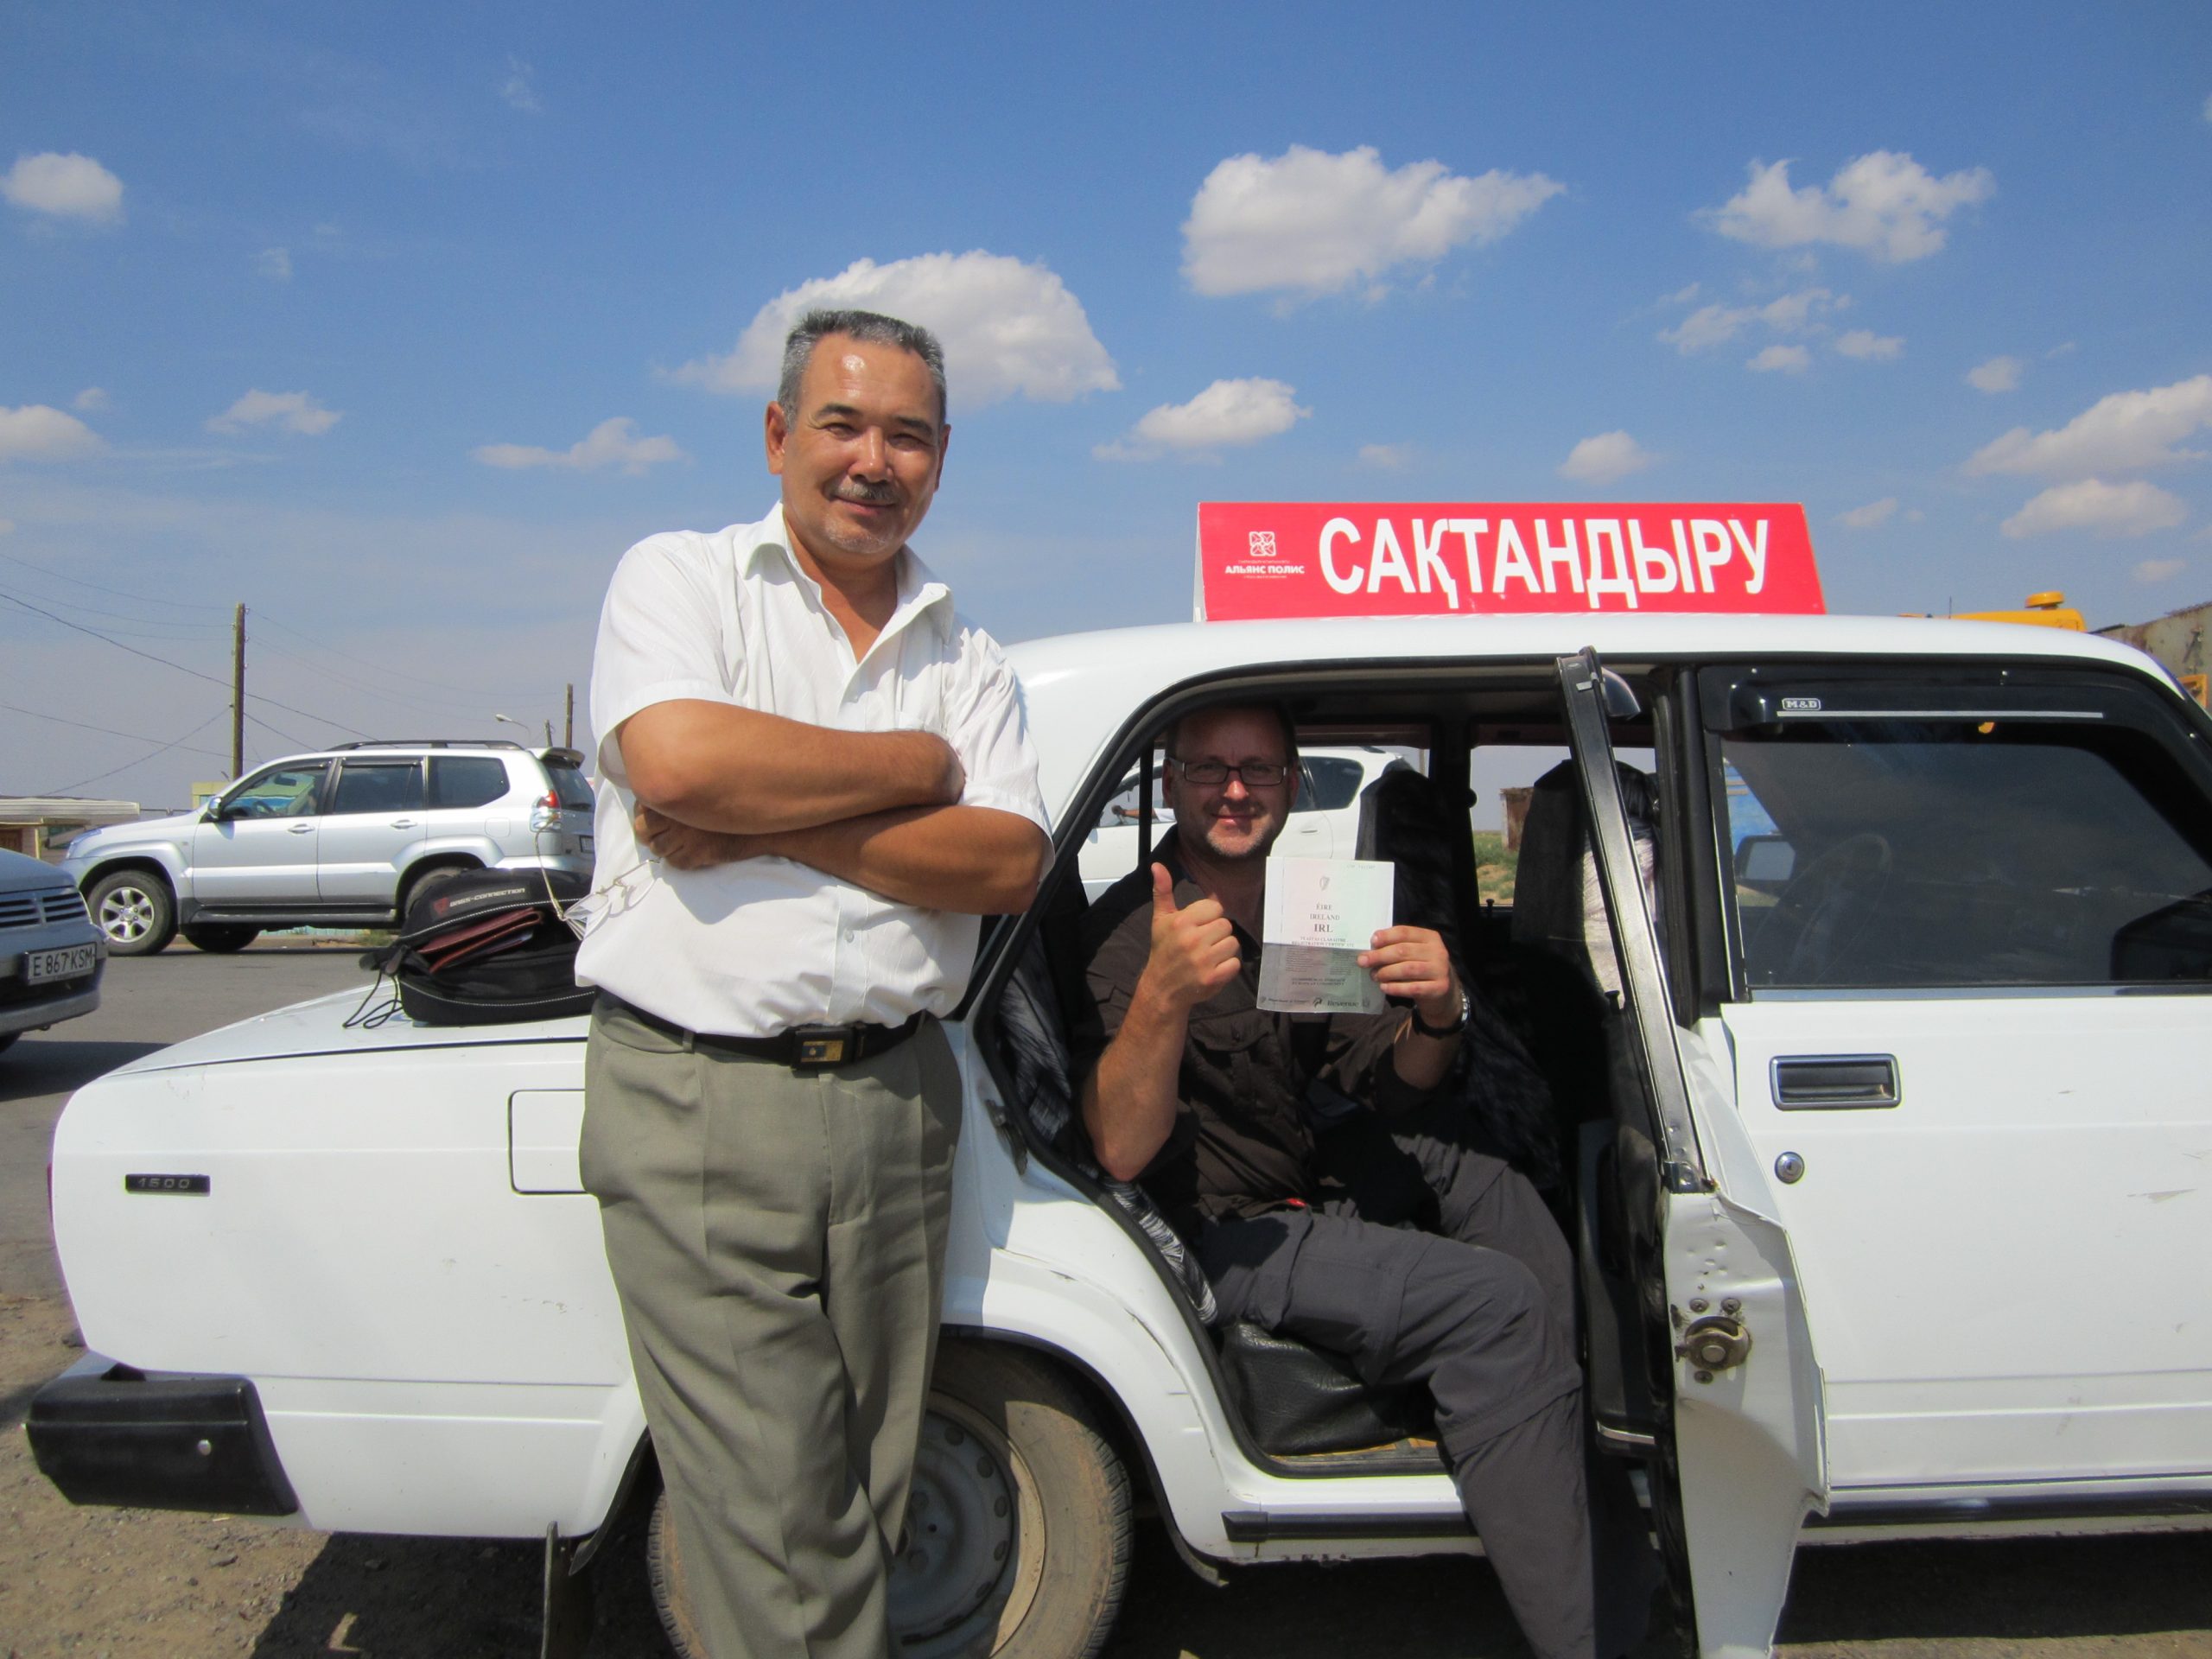 kazak rally motor insurance